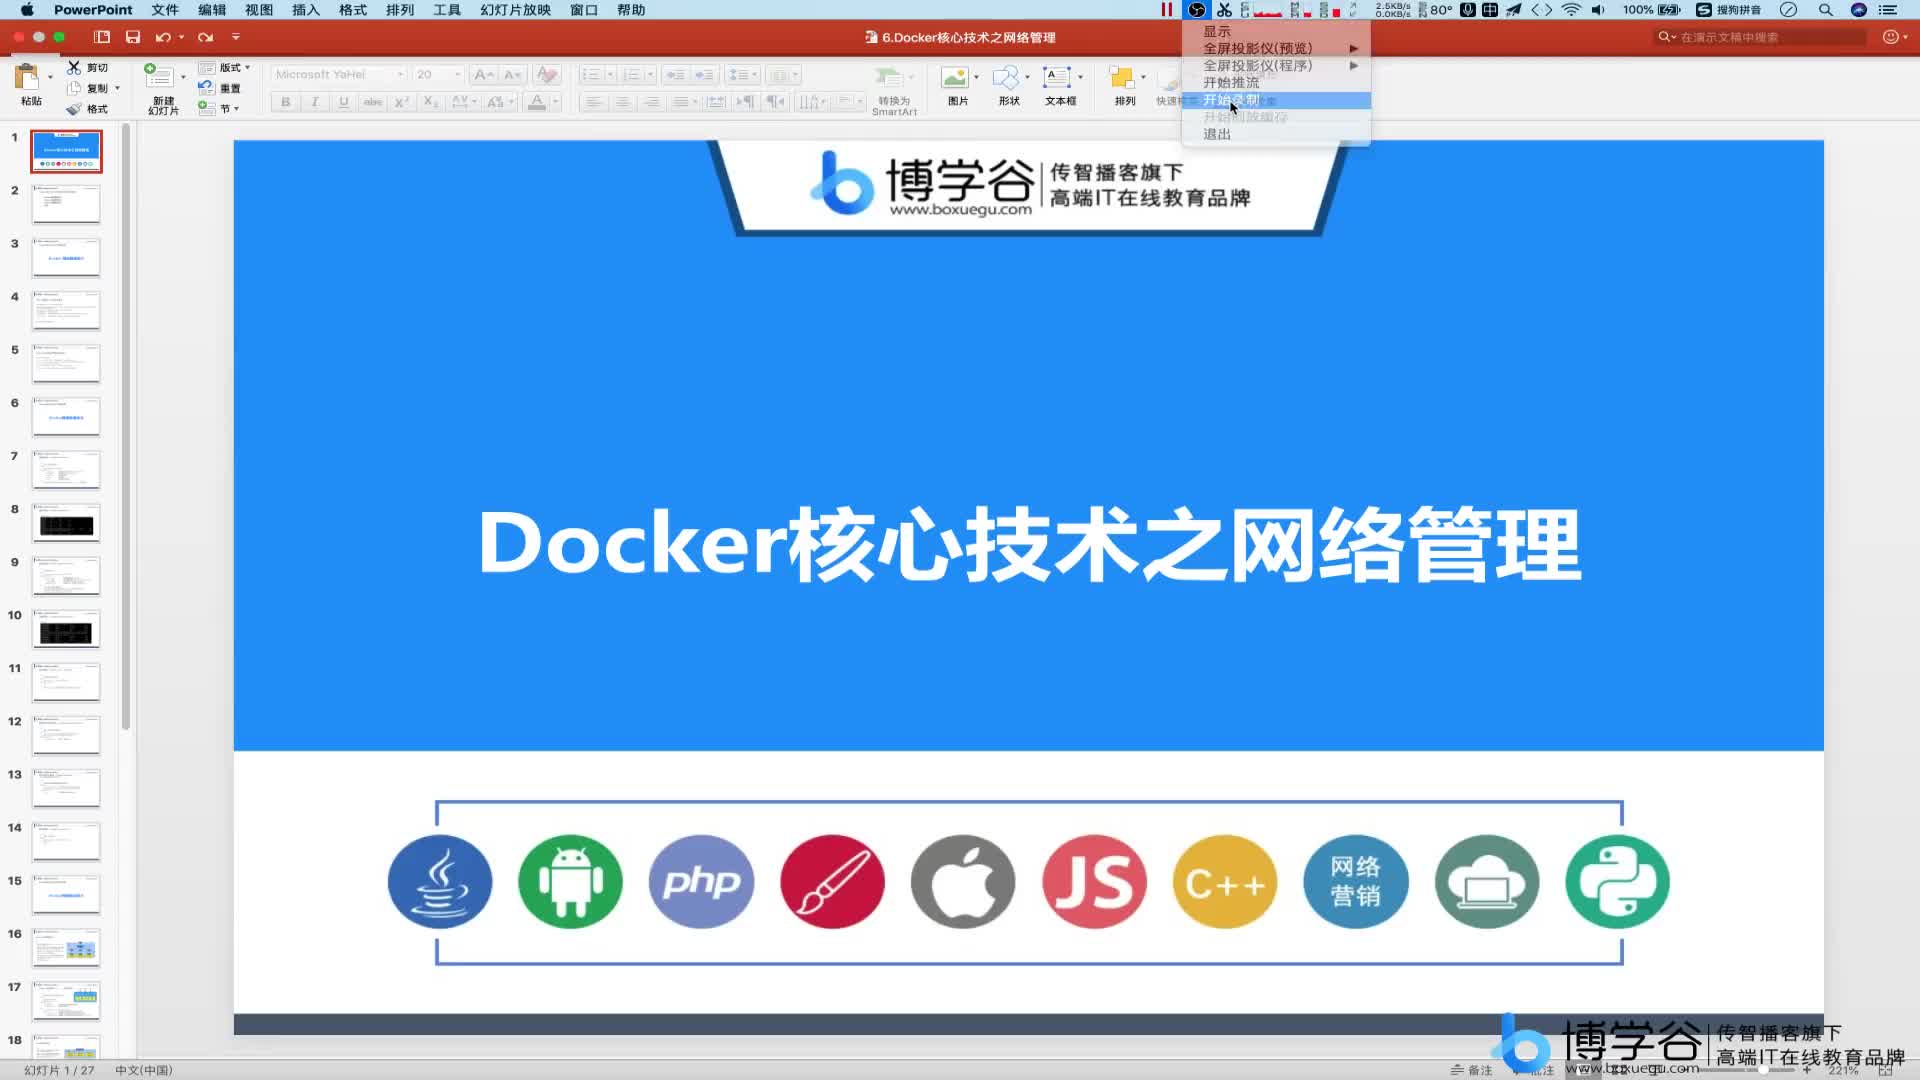 1.Docker网络管理阶段课程简介